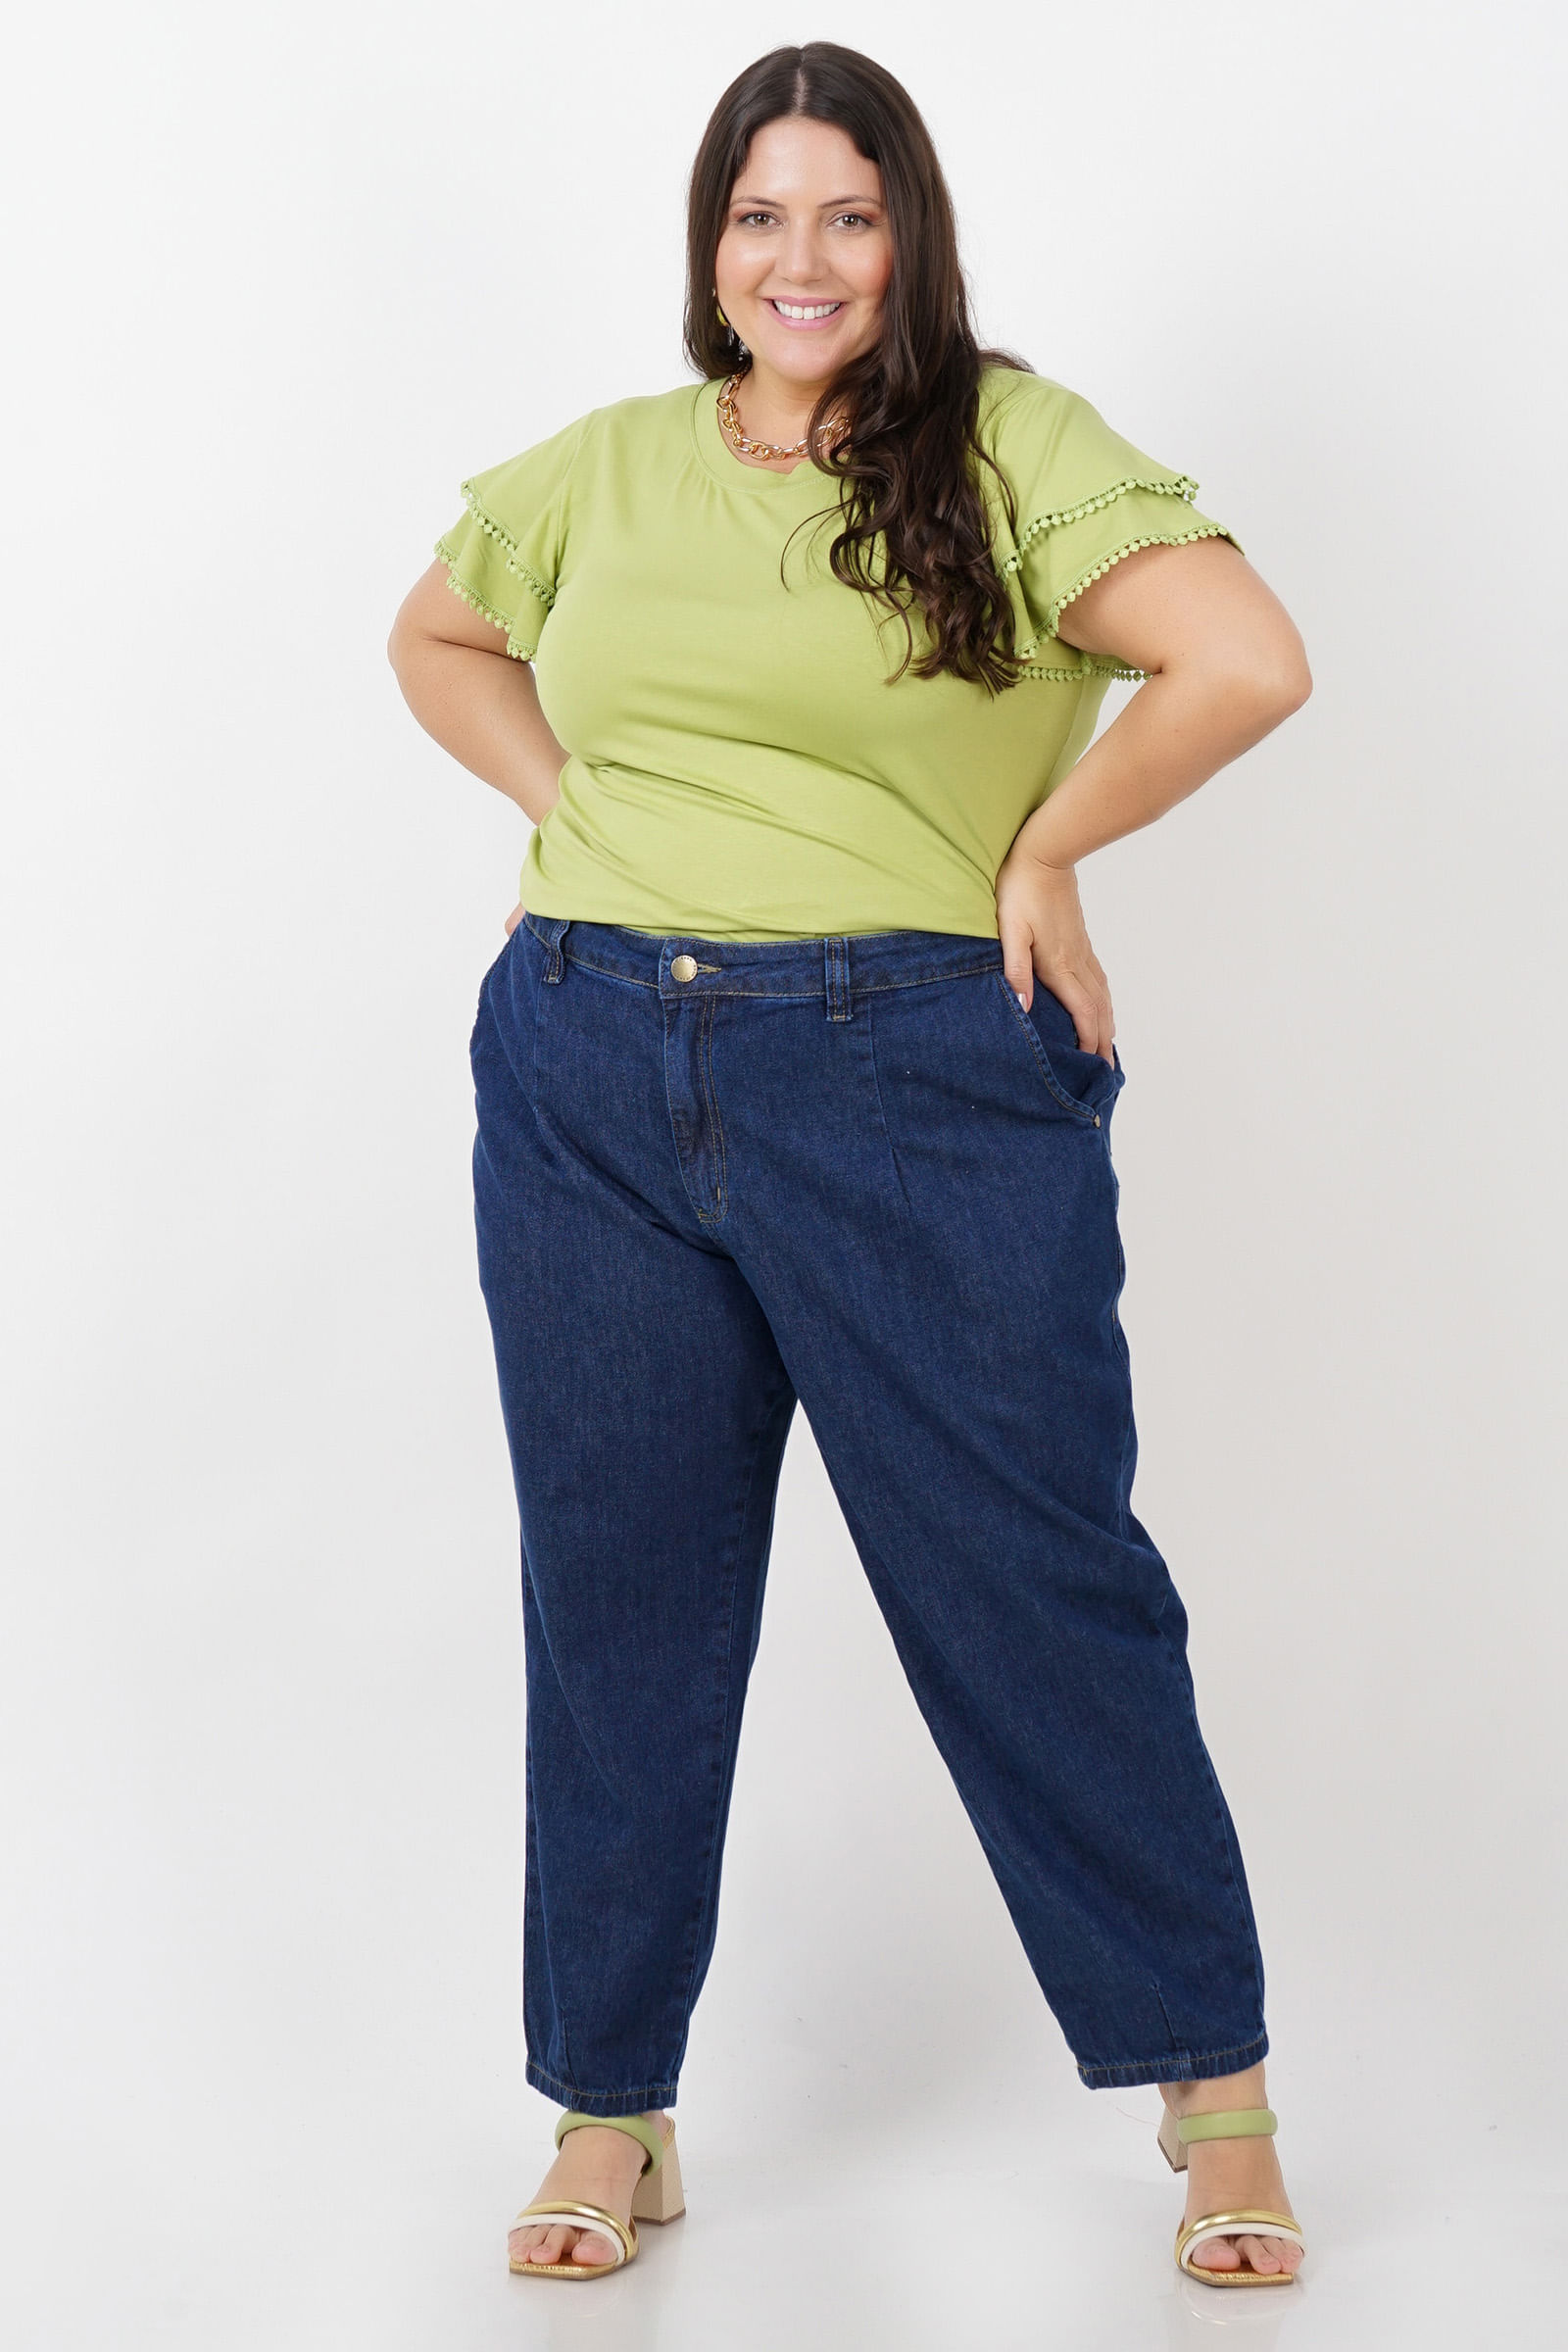 Calca-slouchy-jeans-plus-size